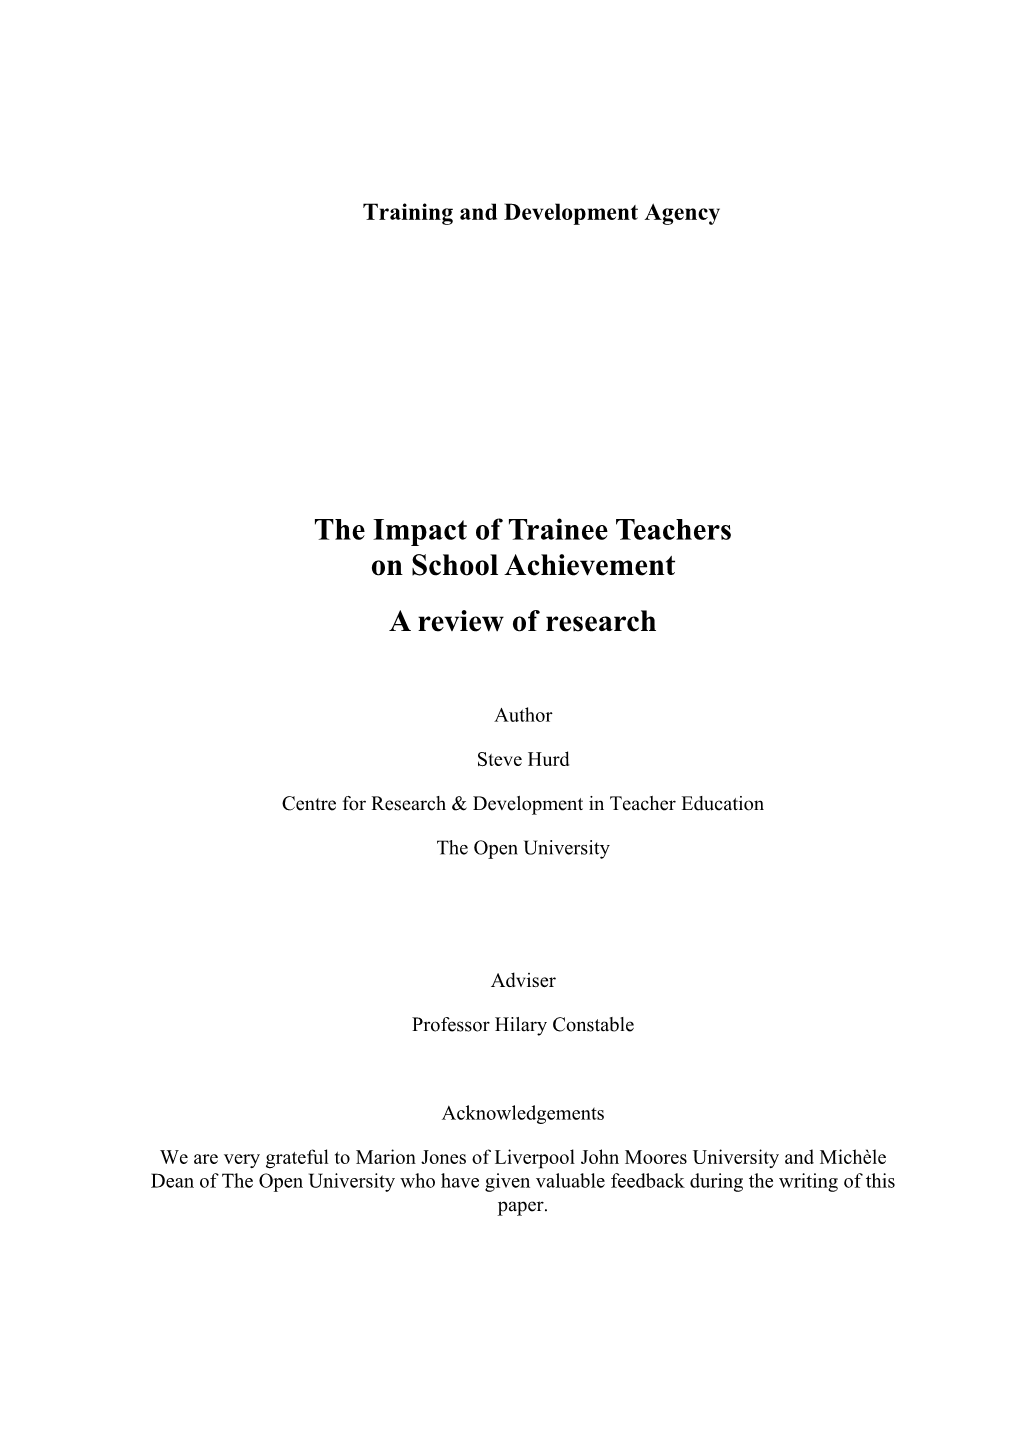 The Impact Of Trainee Teachers On School Achievement